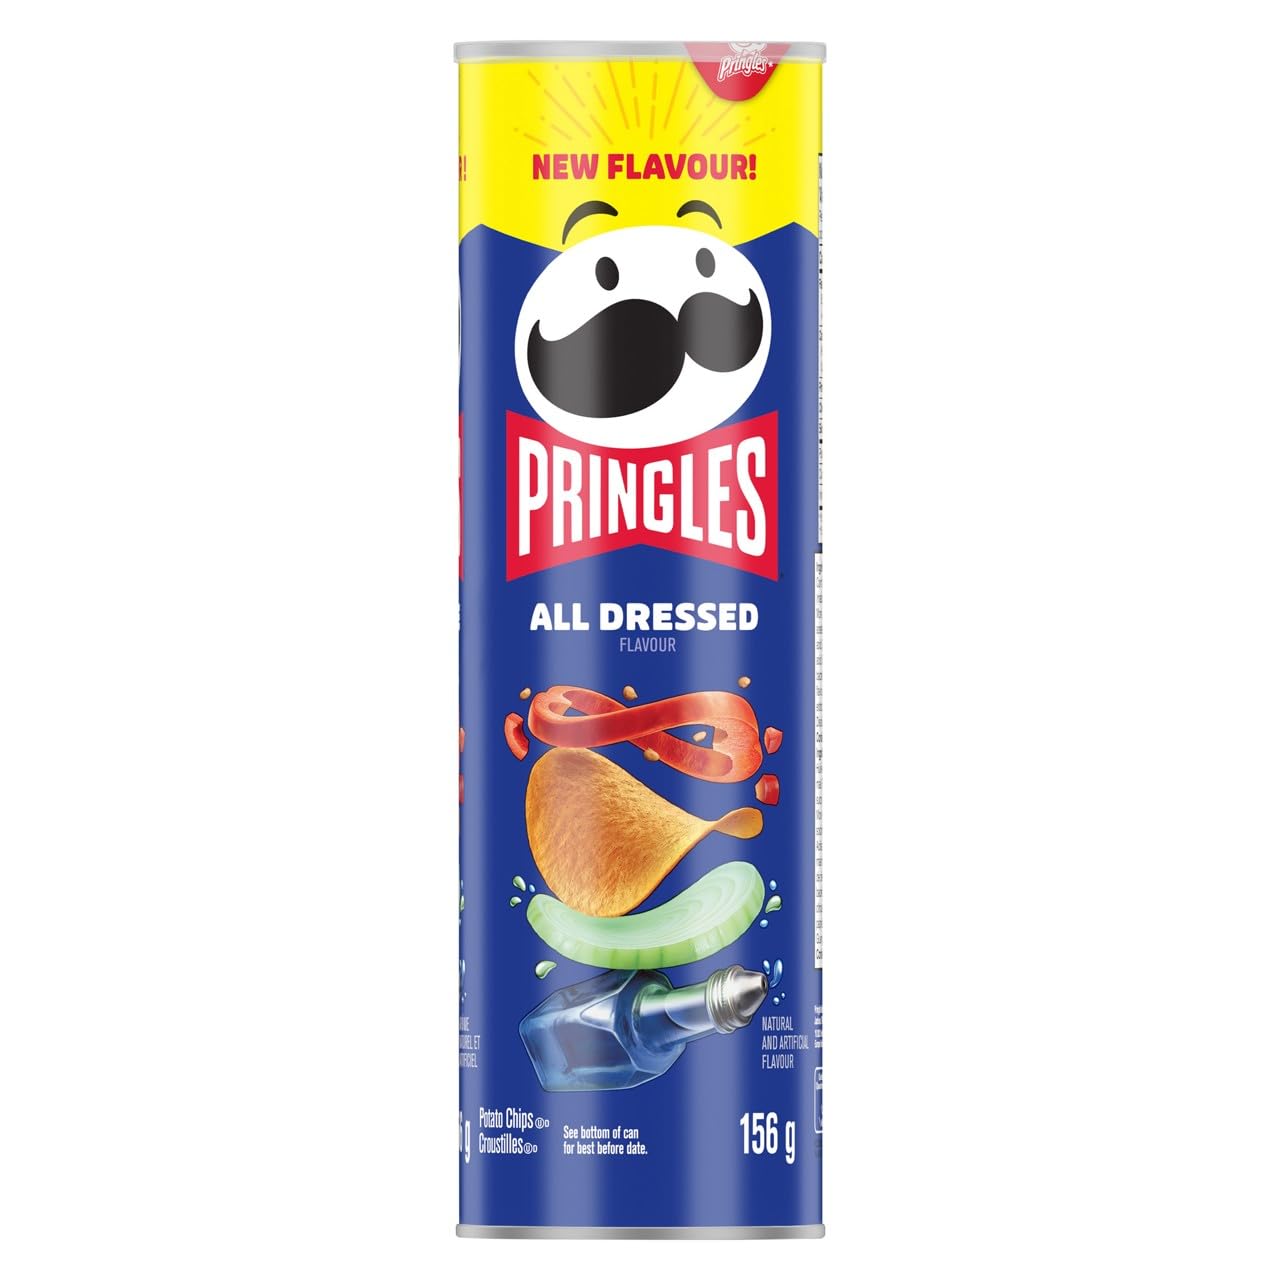 Pringles All Dressed - 156g